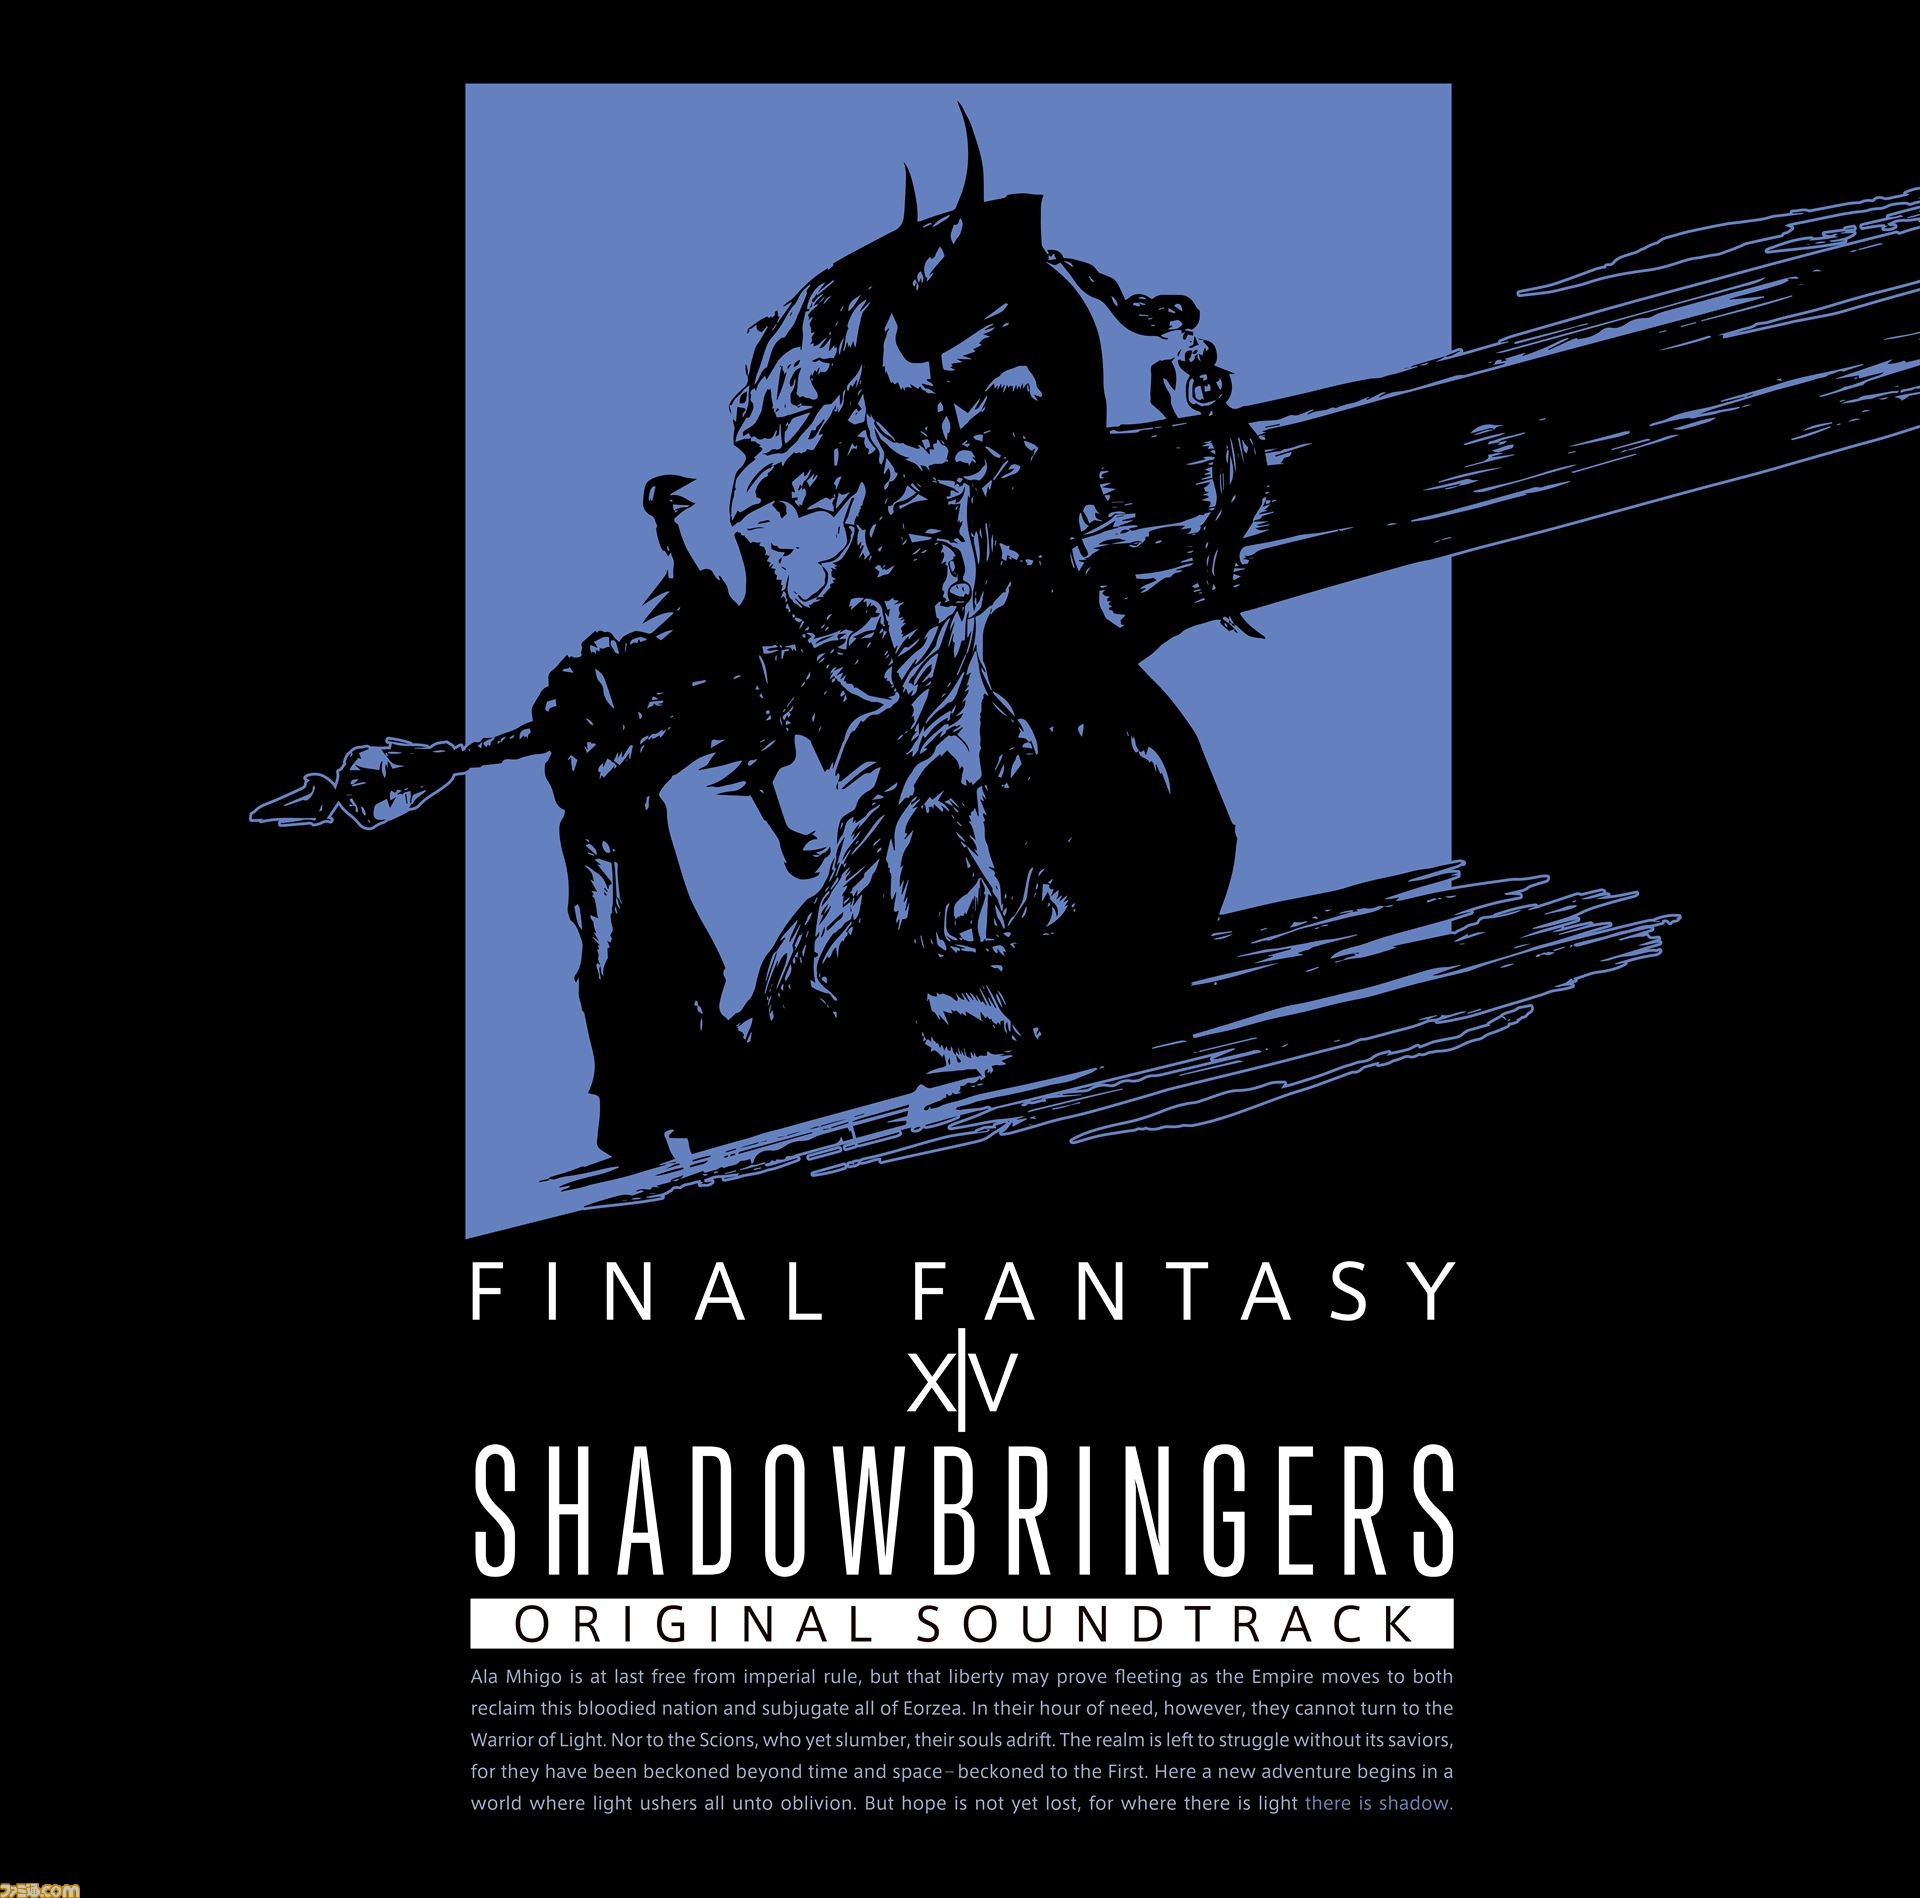 Ff14 の 漆黒のヴィランズ の楽曲を含む全曲を収録した最新サントラ Shadowbringers Final Fantasy Xiv Original Soundtrack が9月11日に発売 ファミ通 Com